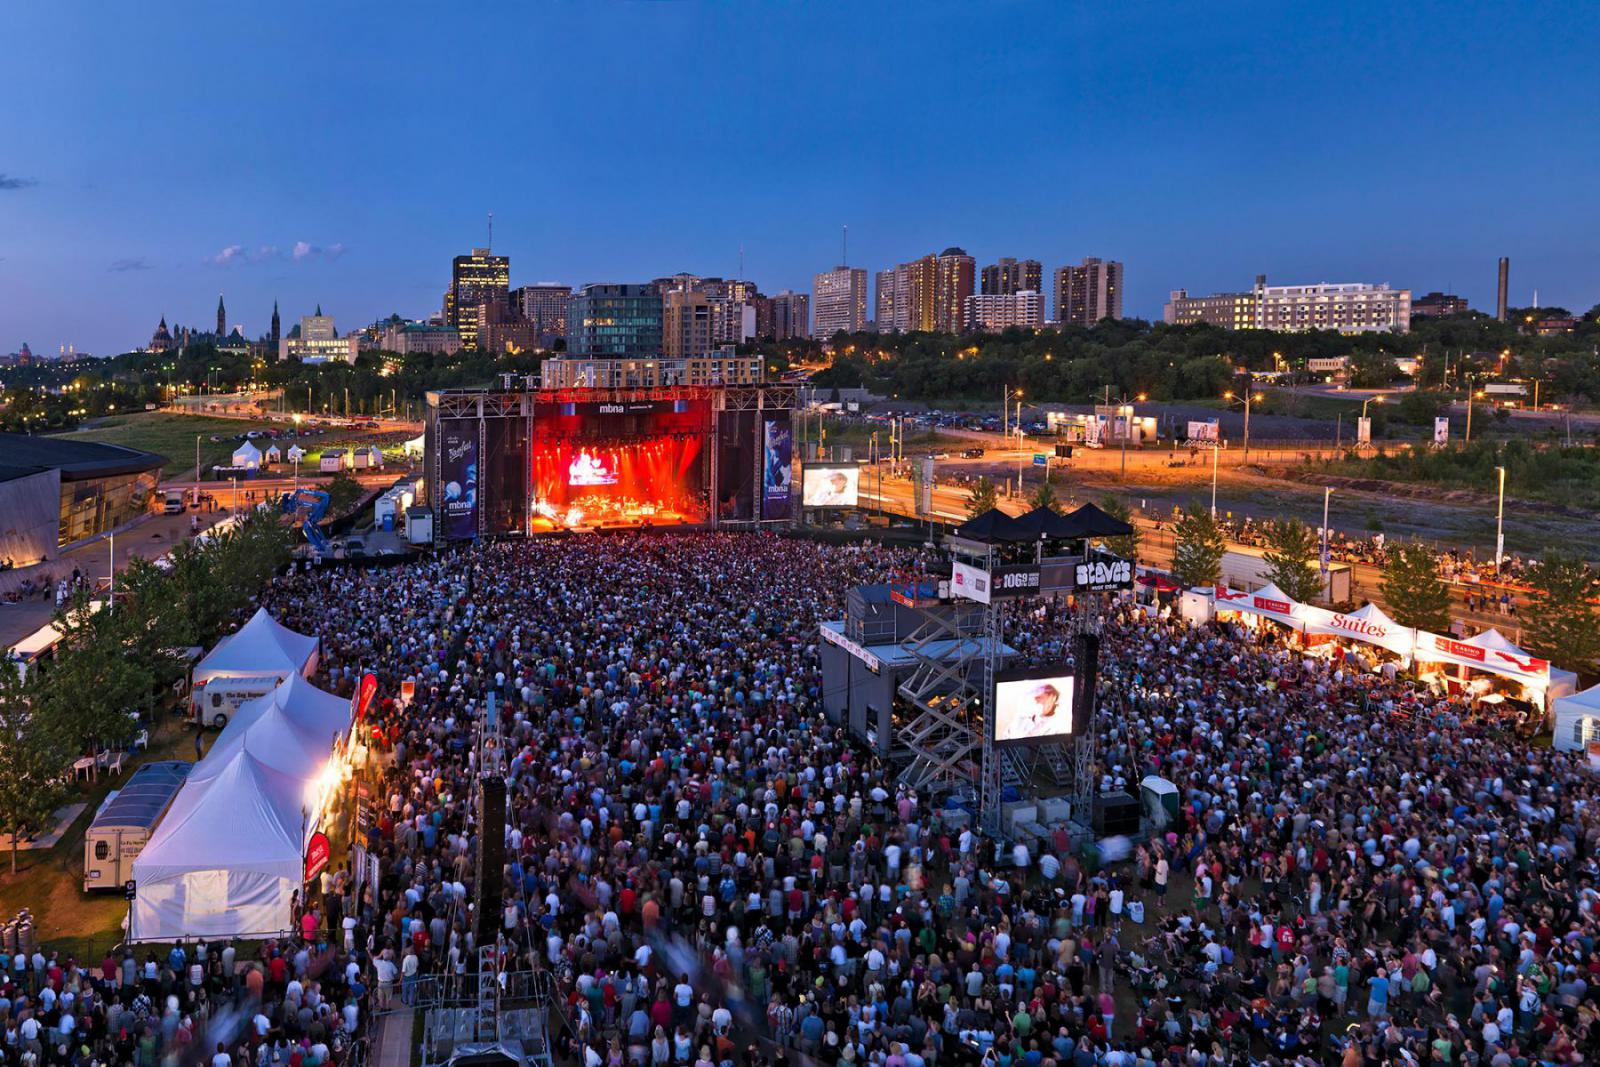 RBC Bluesfest trekt jaarlijks duizenden bezoekers naar Ottawa | Ottawa Tourism